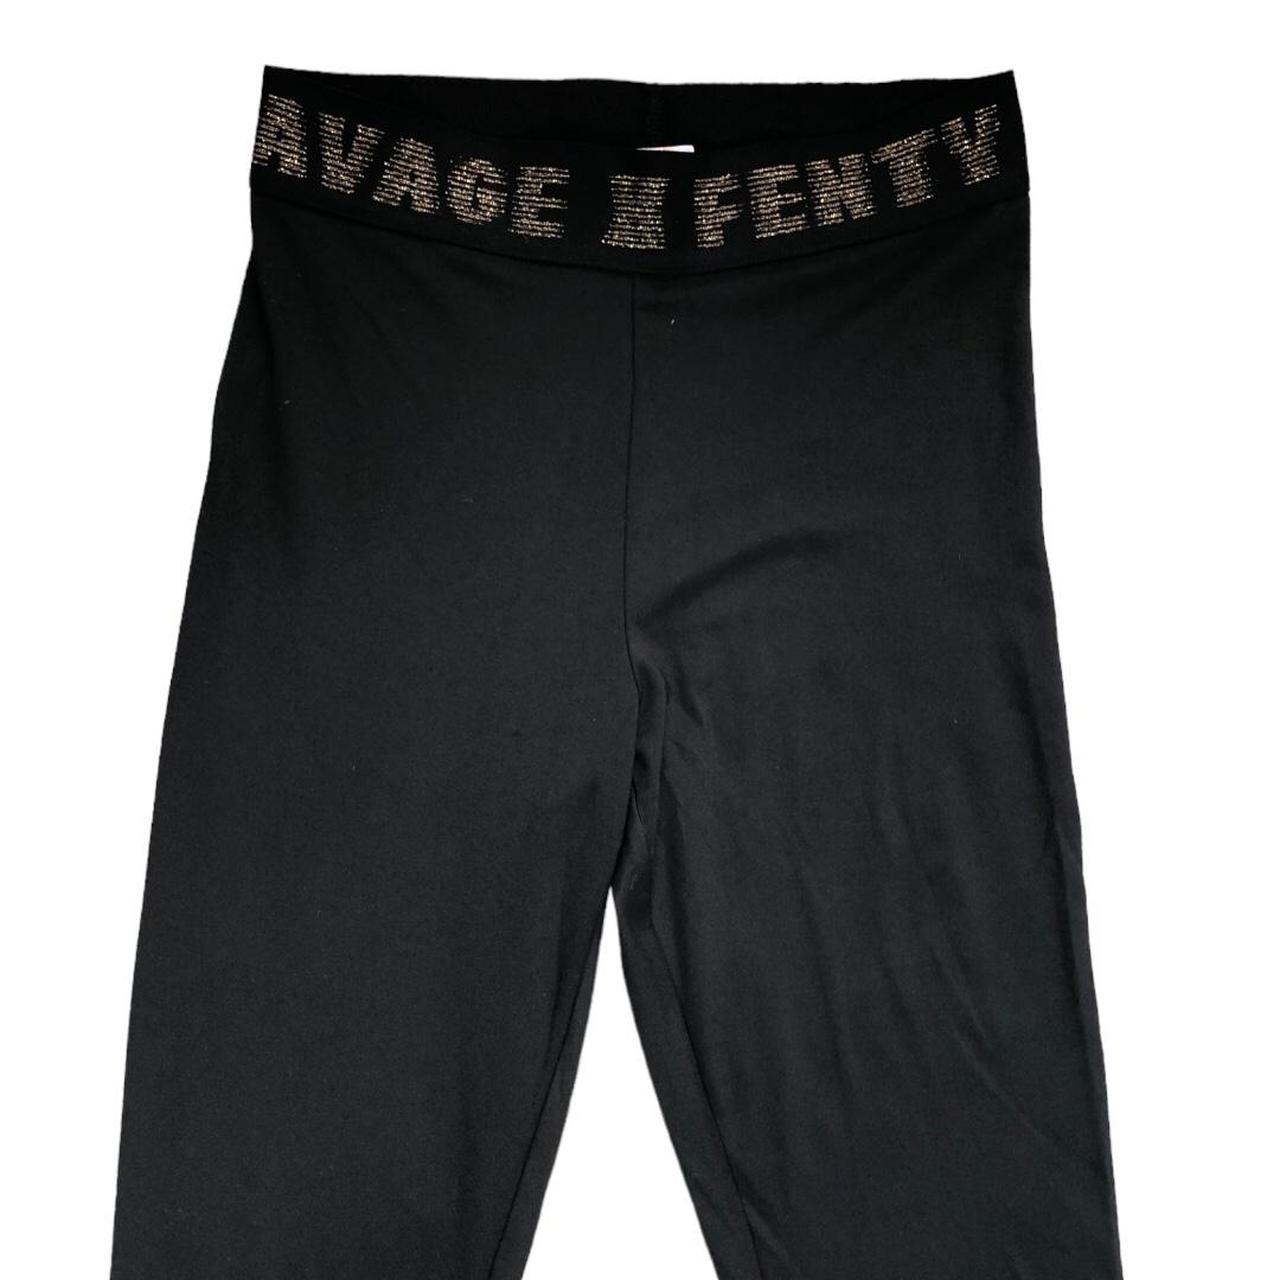 SavagexFenty - Black Activewear Leggings Rayon Nylon